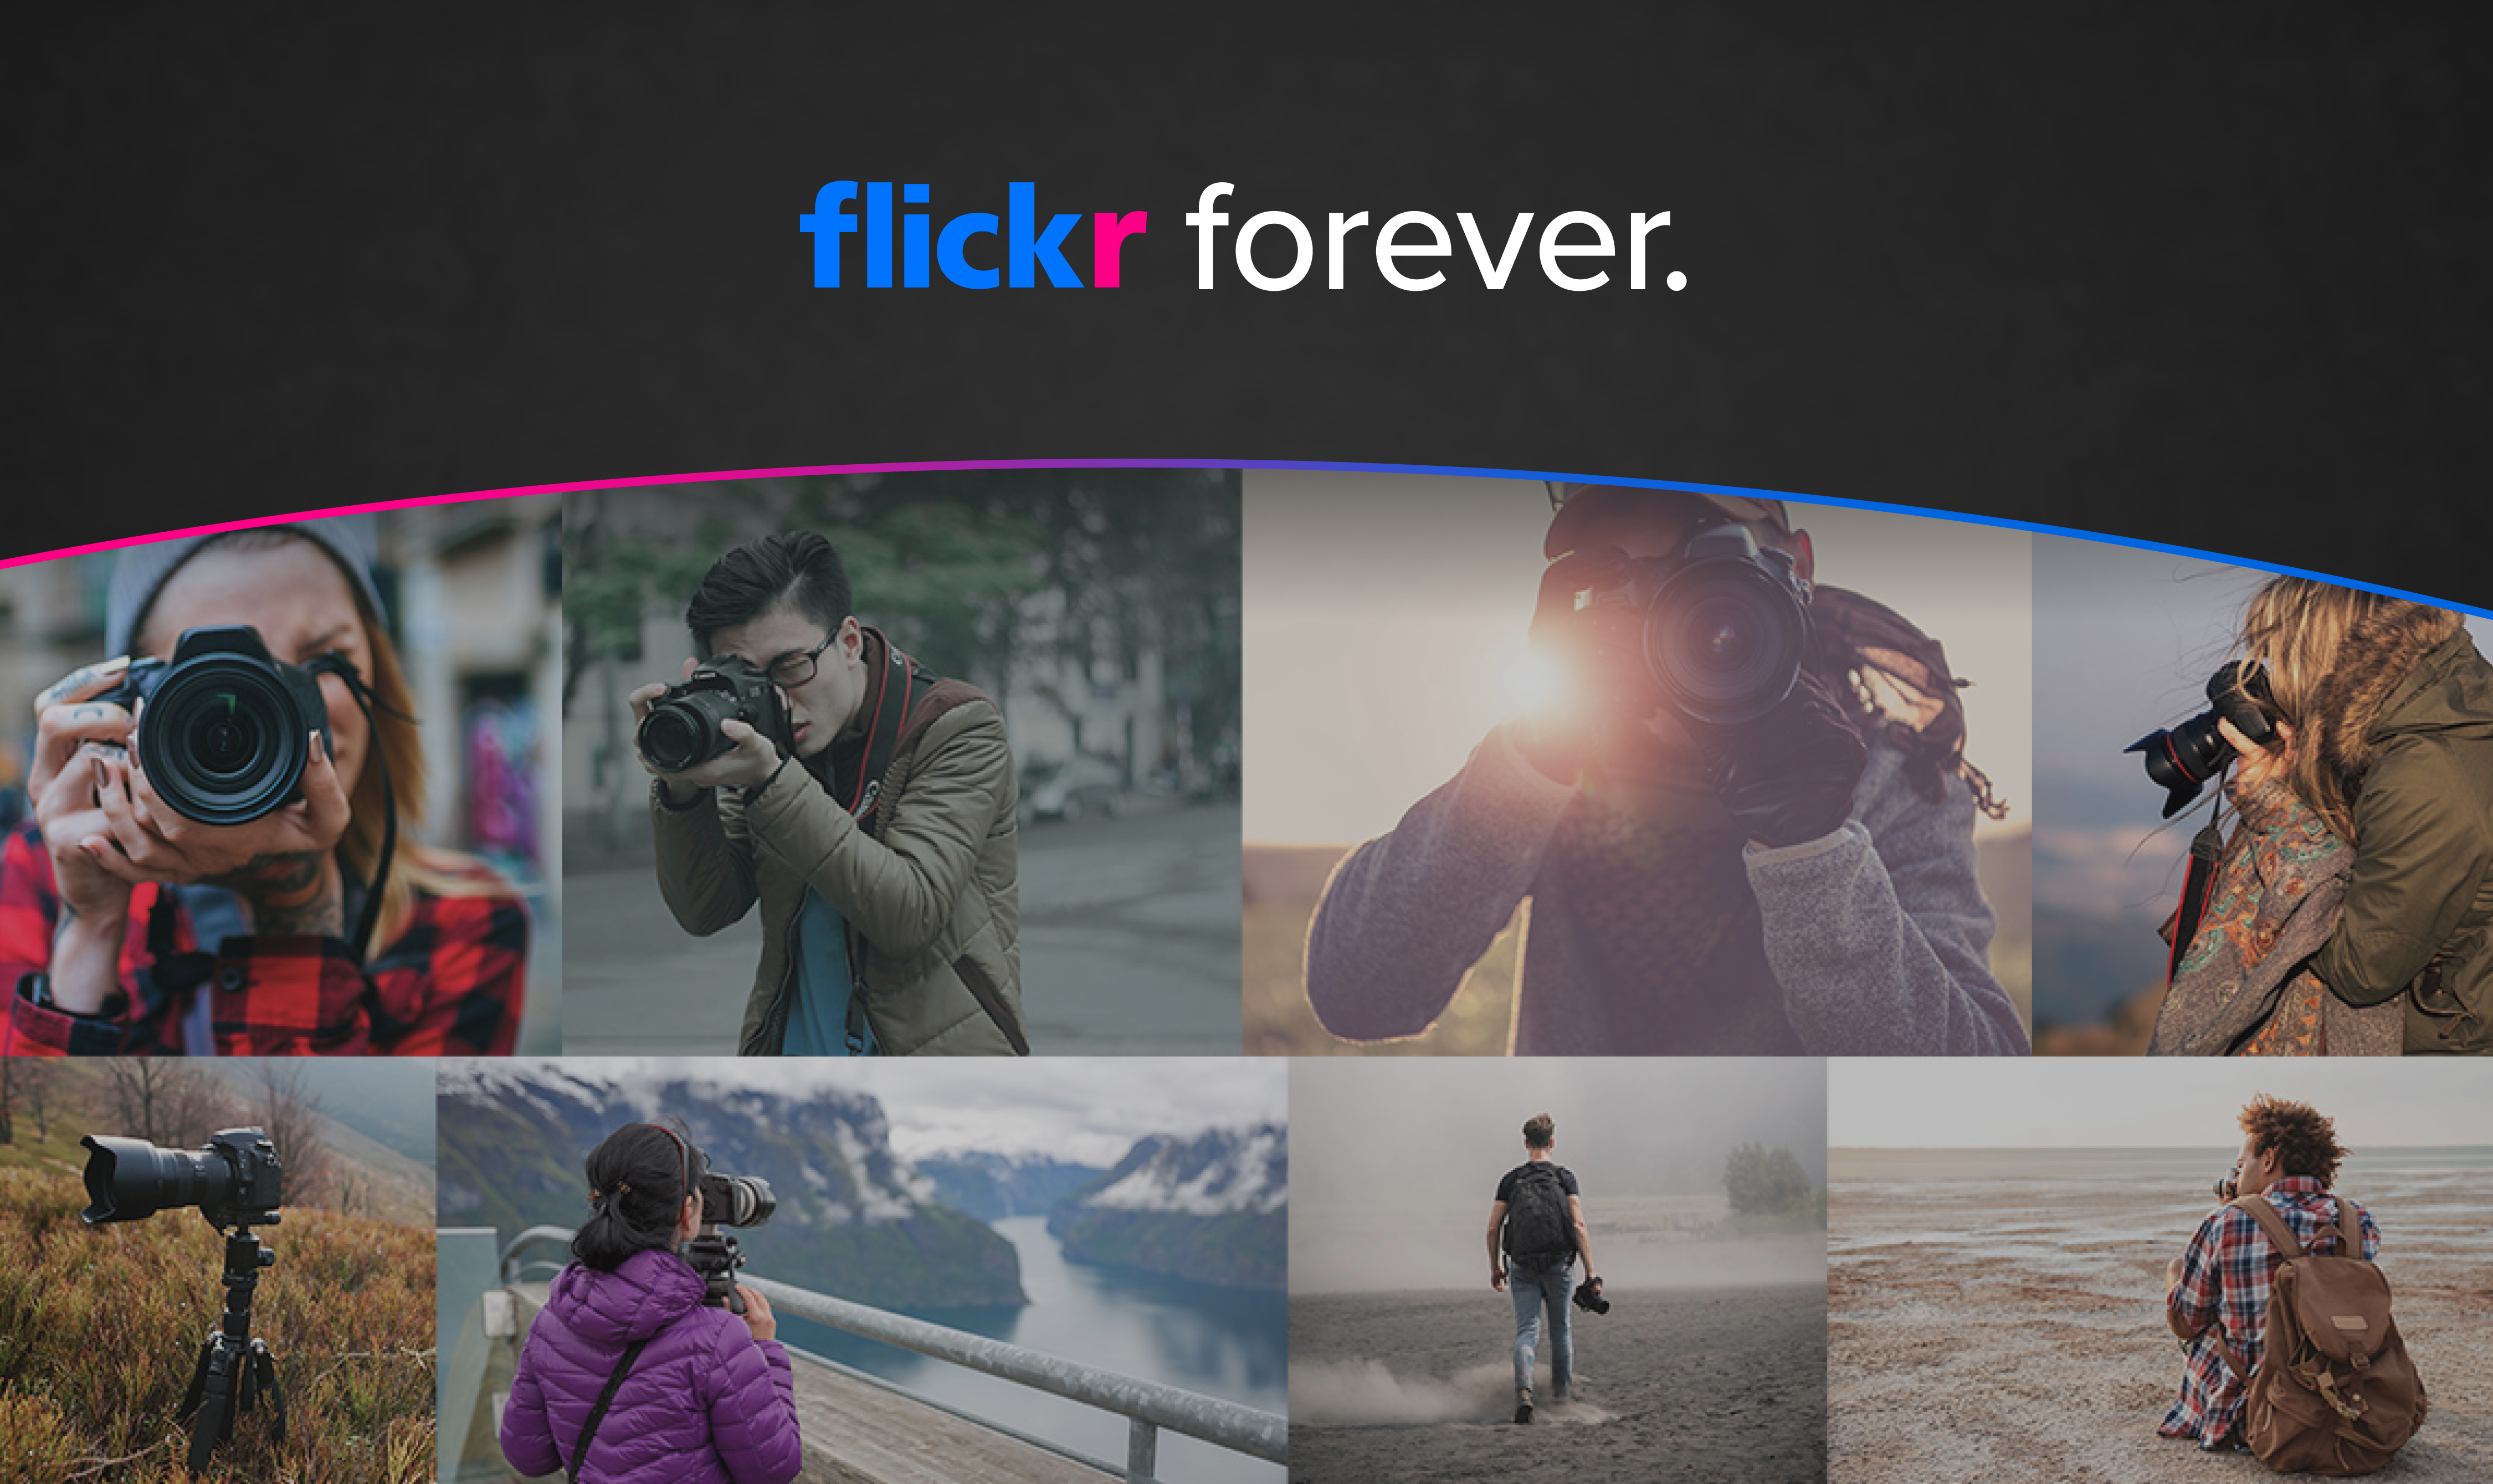 Flickr forever.